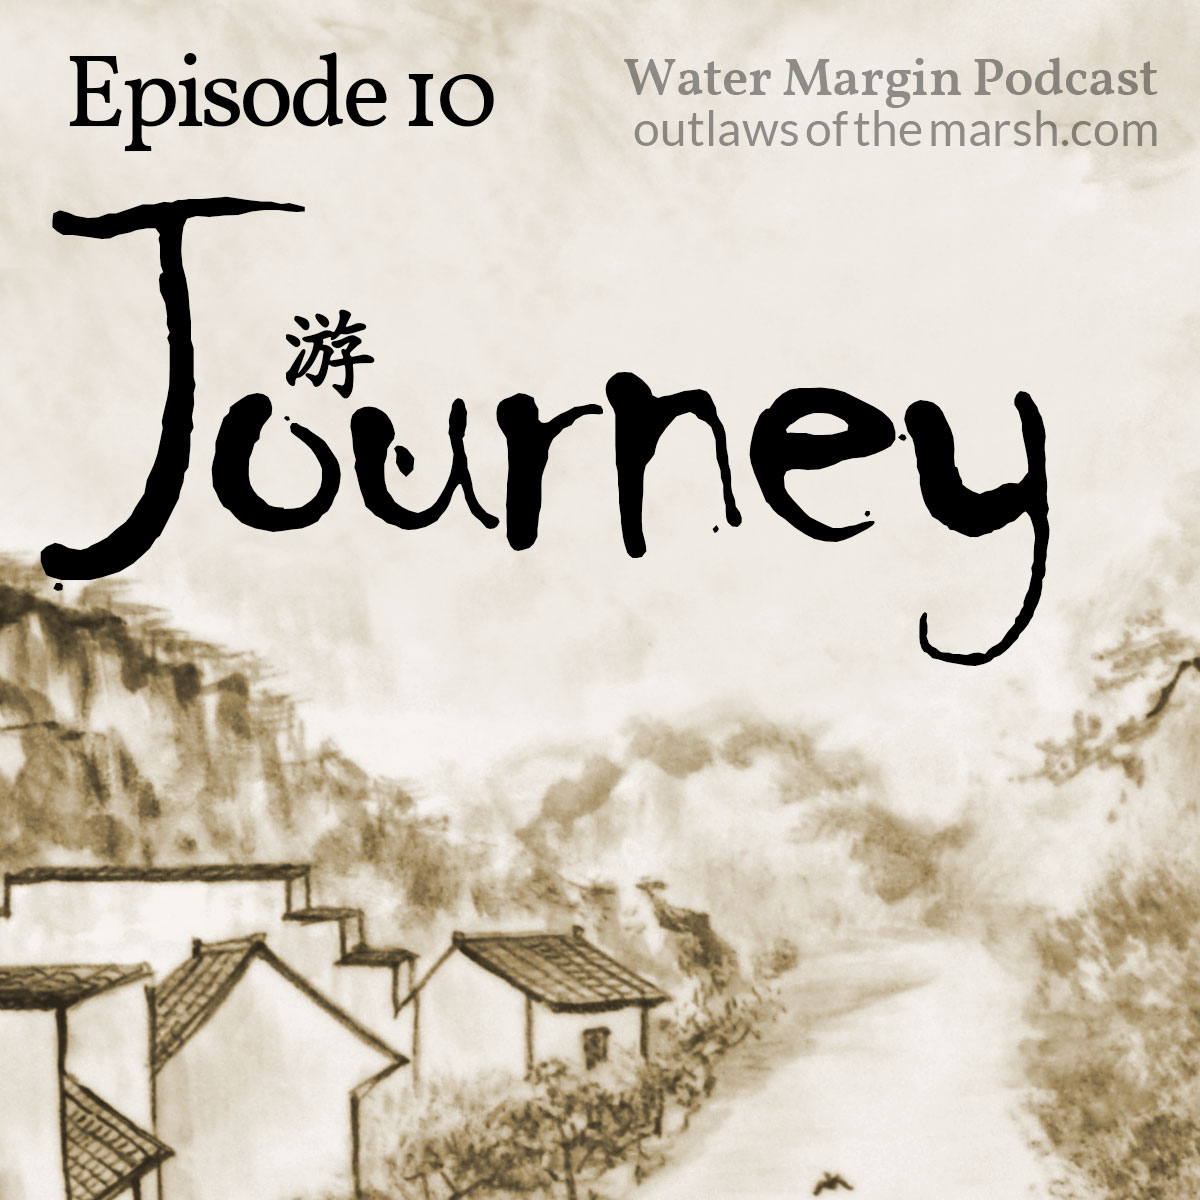 Water Margin Podcast: Episode 010